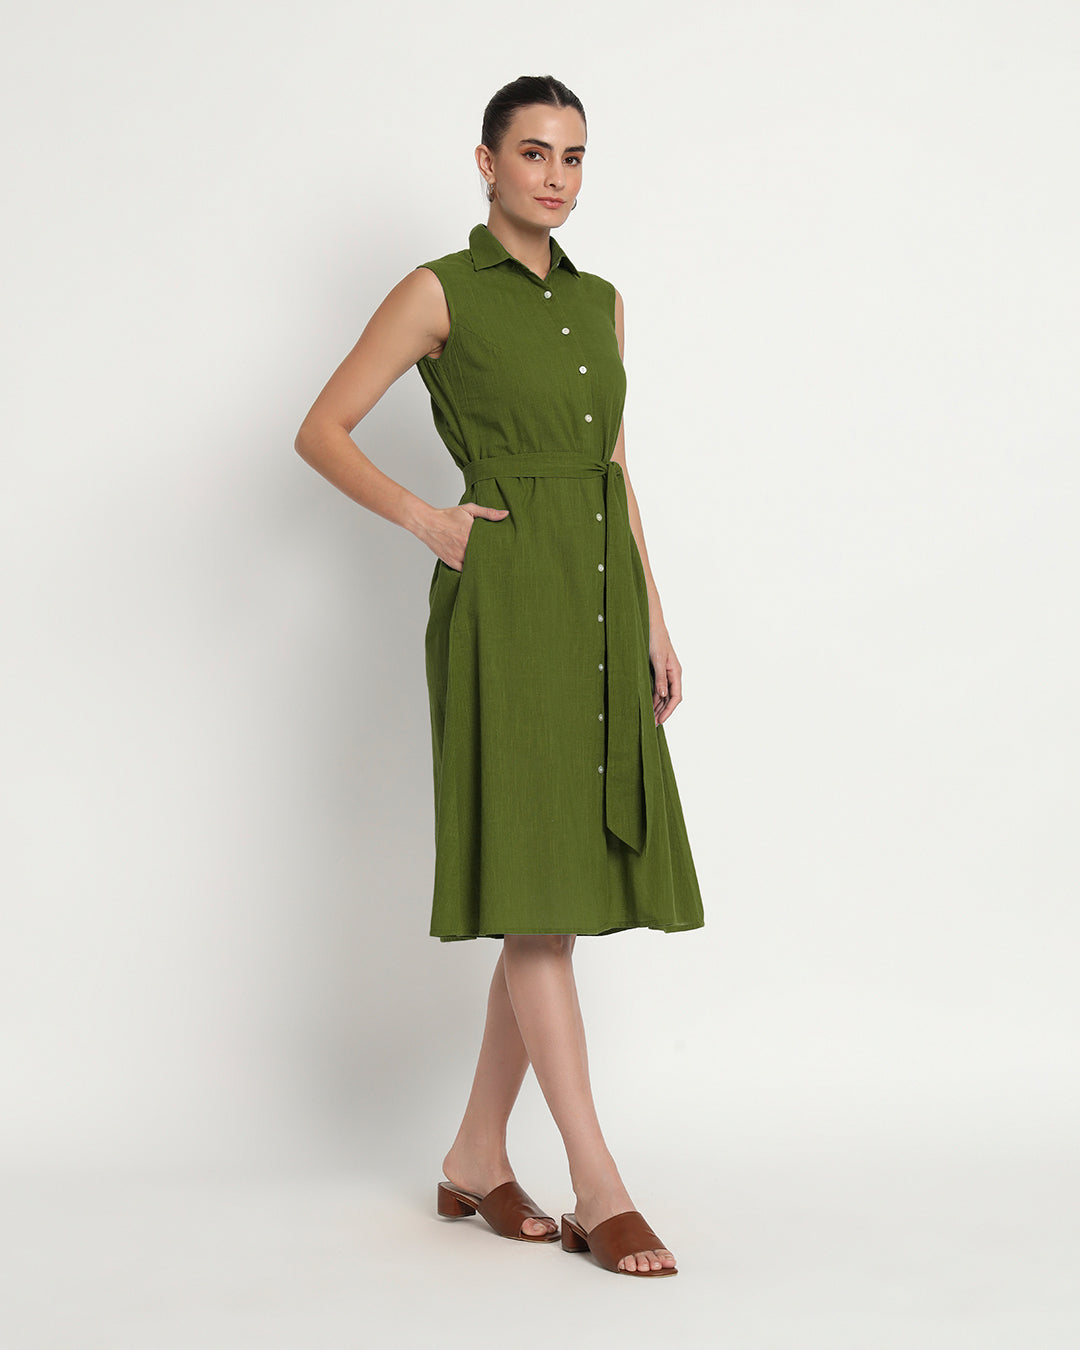 Greening Spring Artful A-Line Dress